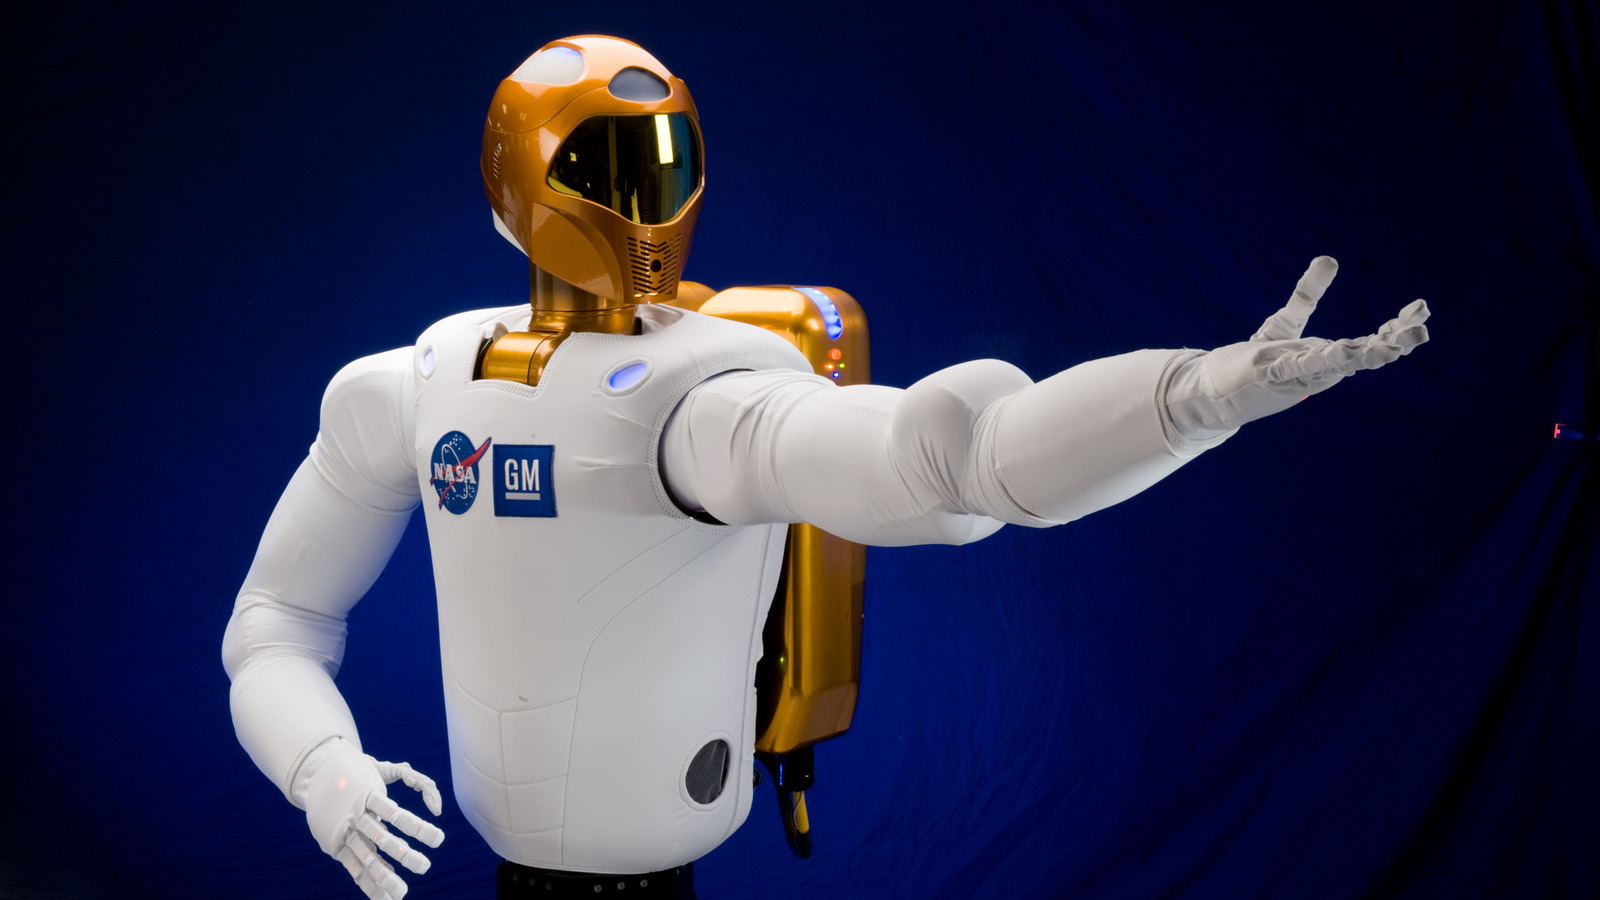 GM and NASA's Robonaut 2 droid